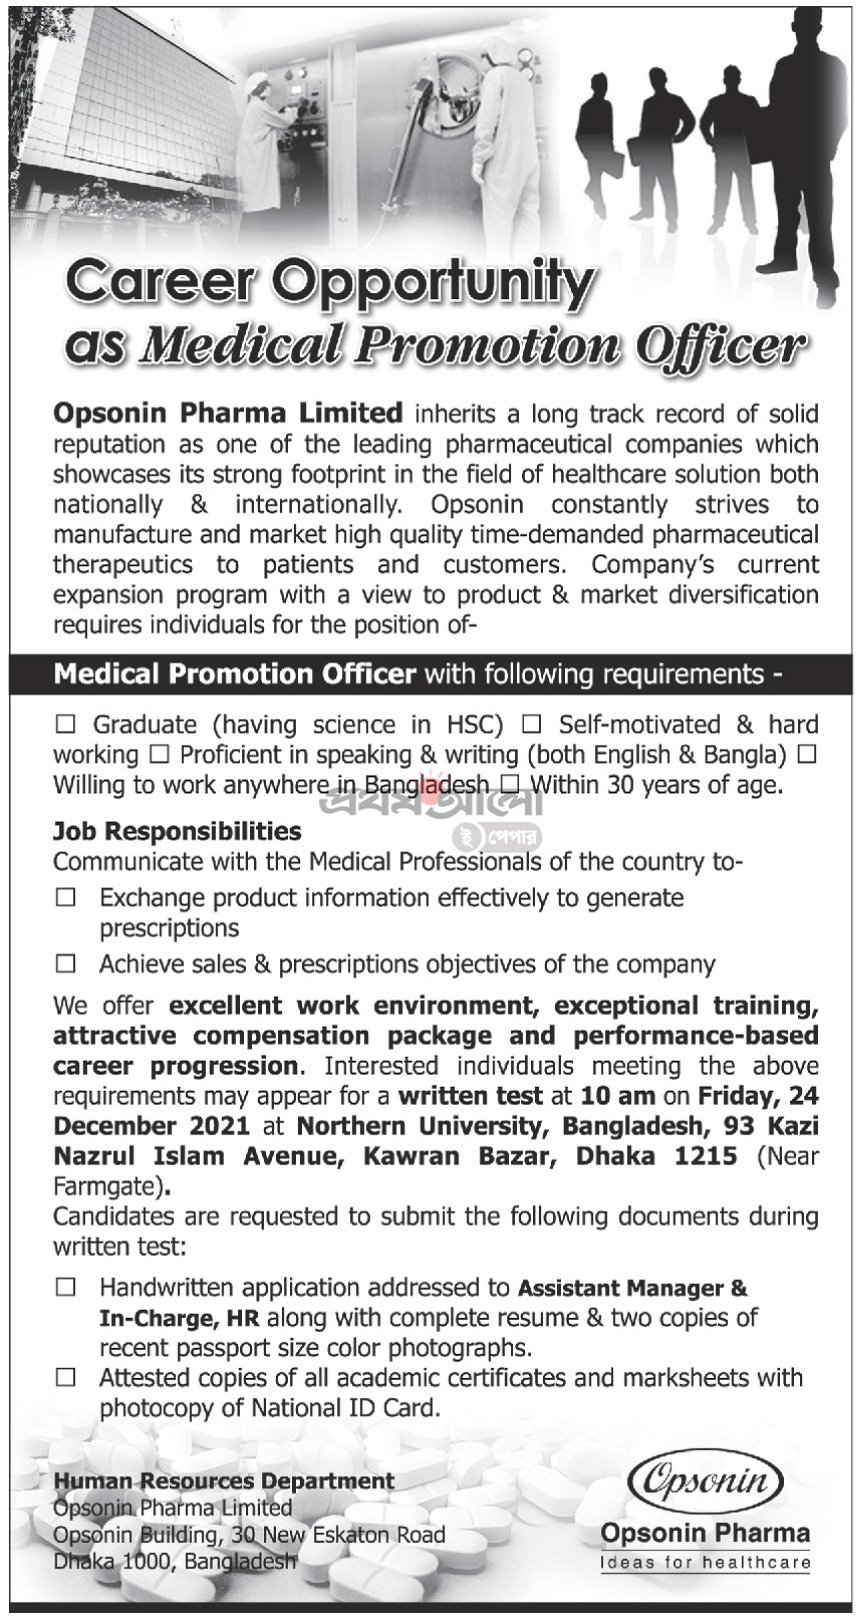 Opsonin Pharma Limited Job Circular 2021 Image & PDF Download